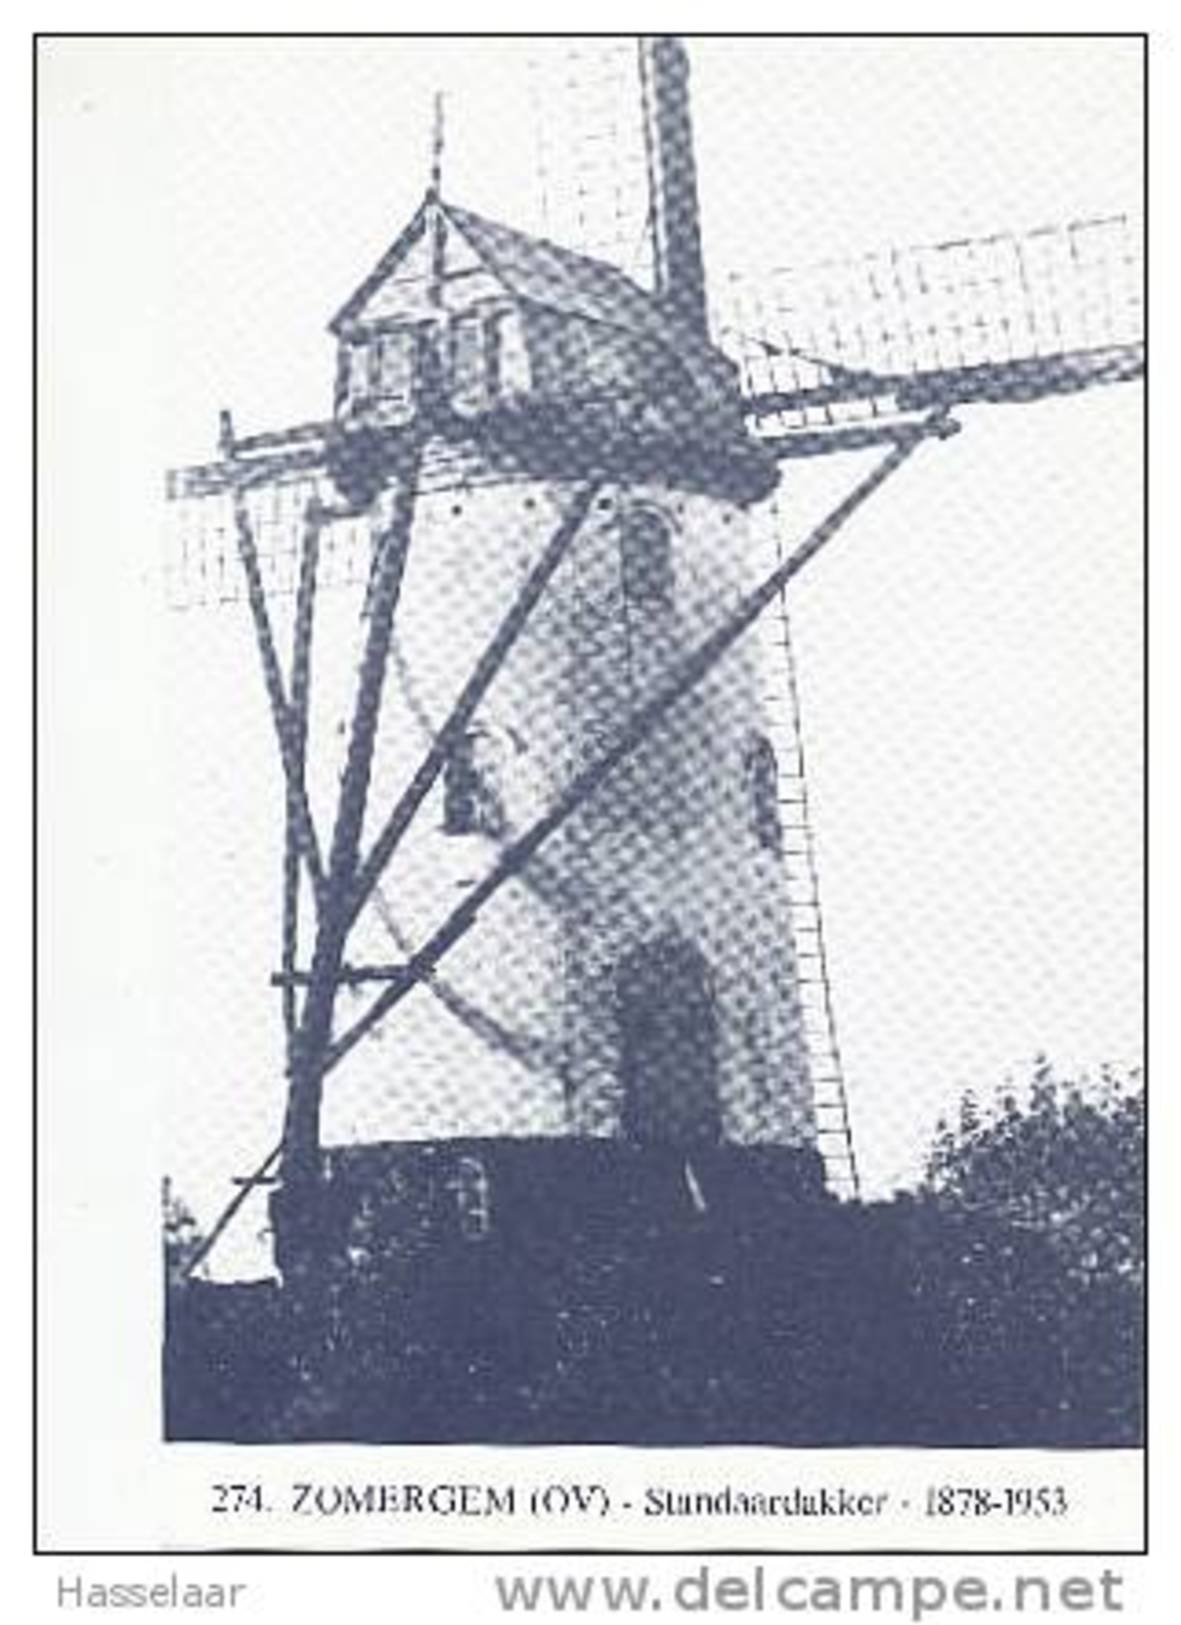 Zomergem - Standaardakker - 1878-1953 - Zomergem